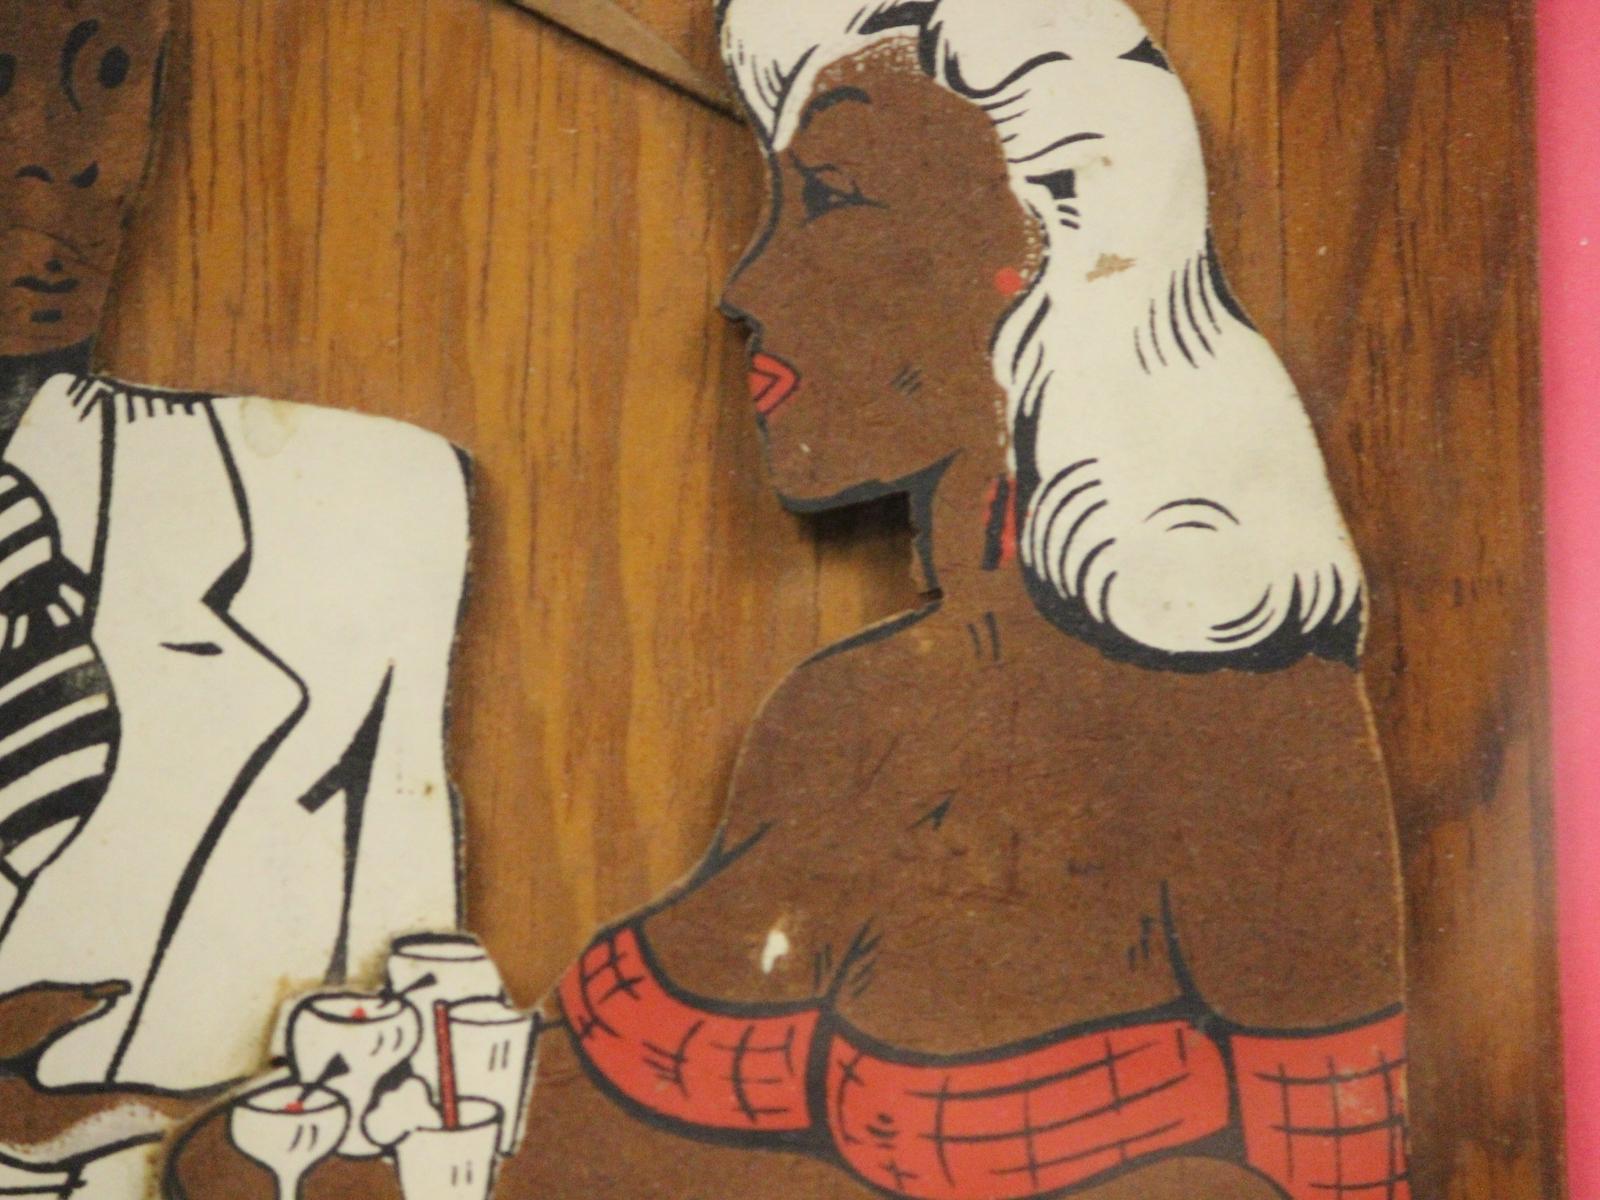 c1930s cocktail lounge coloured cutout on wooden plaque featuring a white dinner jacket clad patron & buxom waitress conversing

Art Sz: 13 1/2